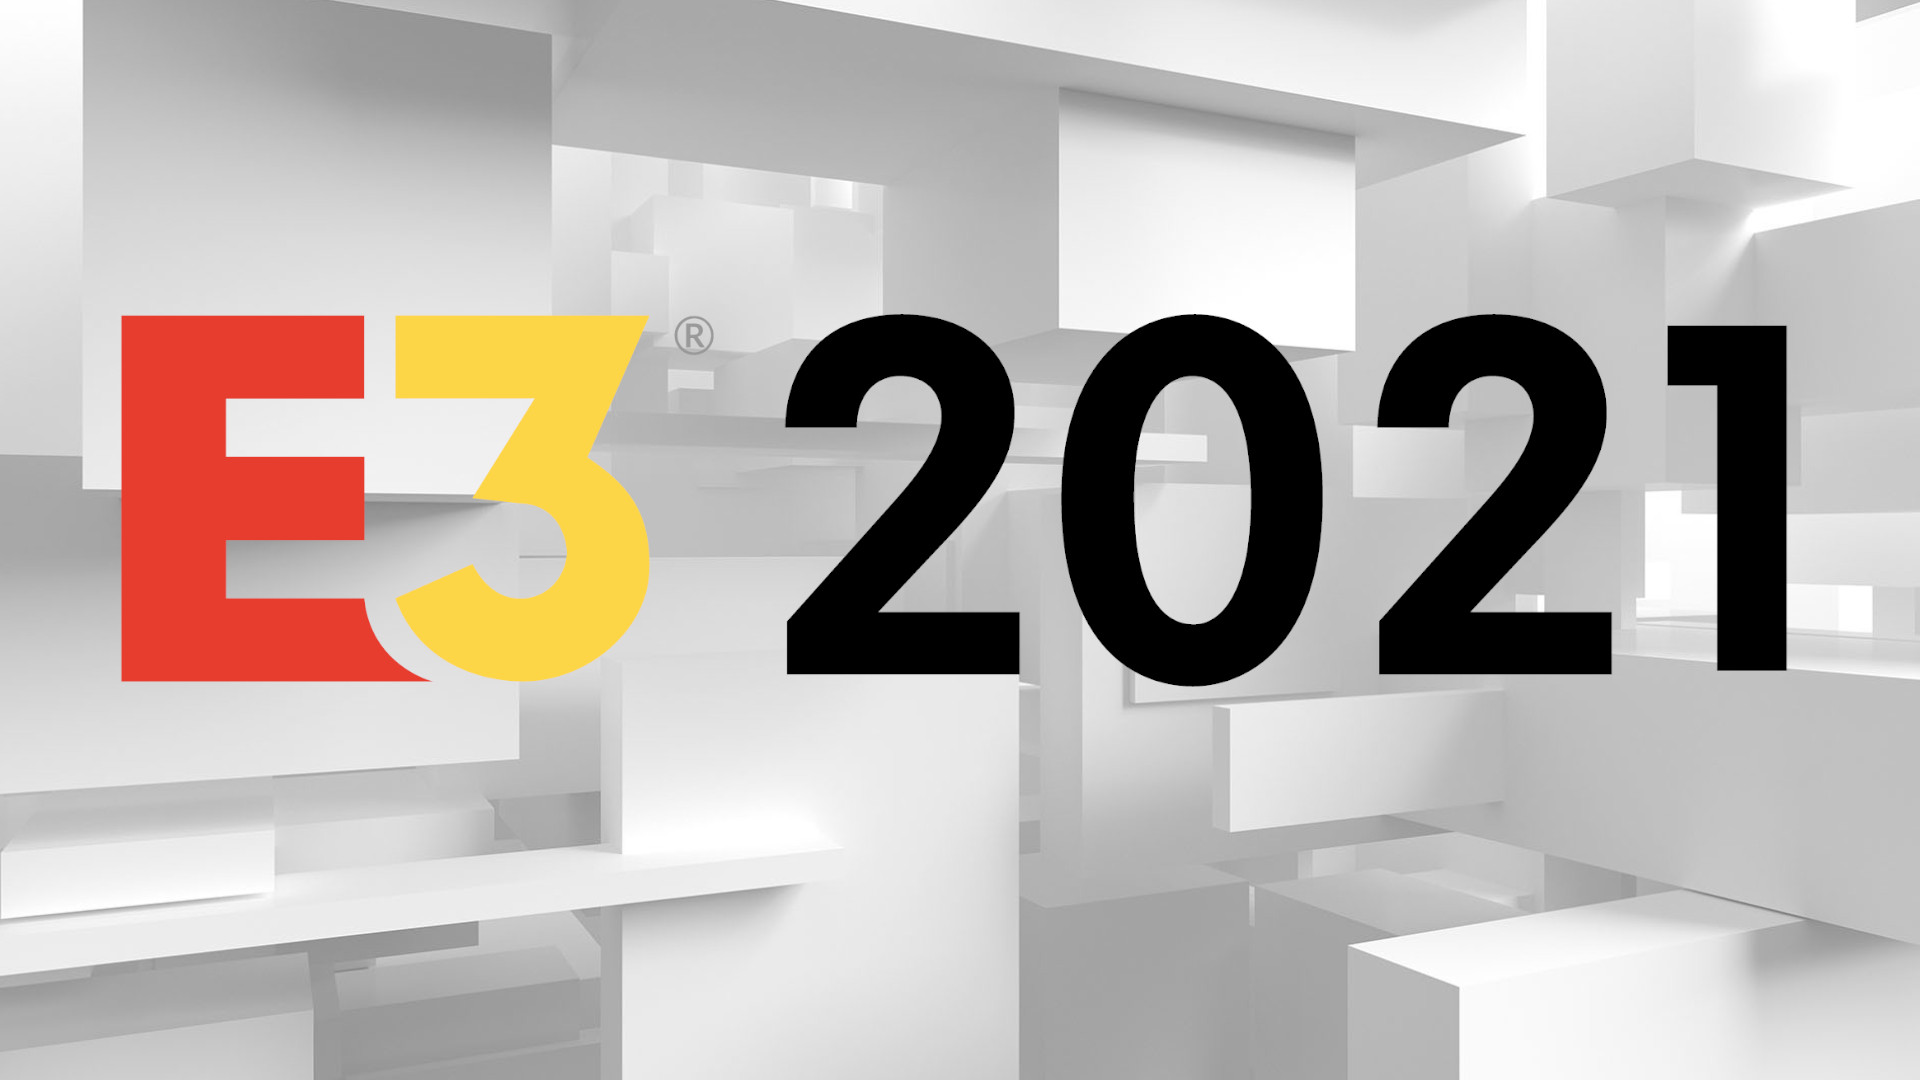 Orari i E3 2021